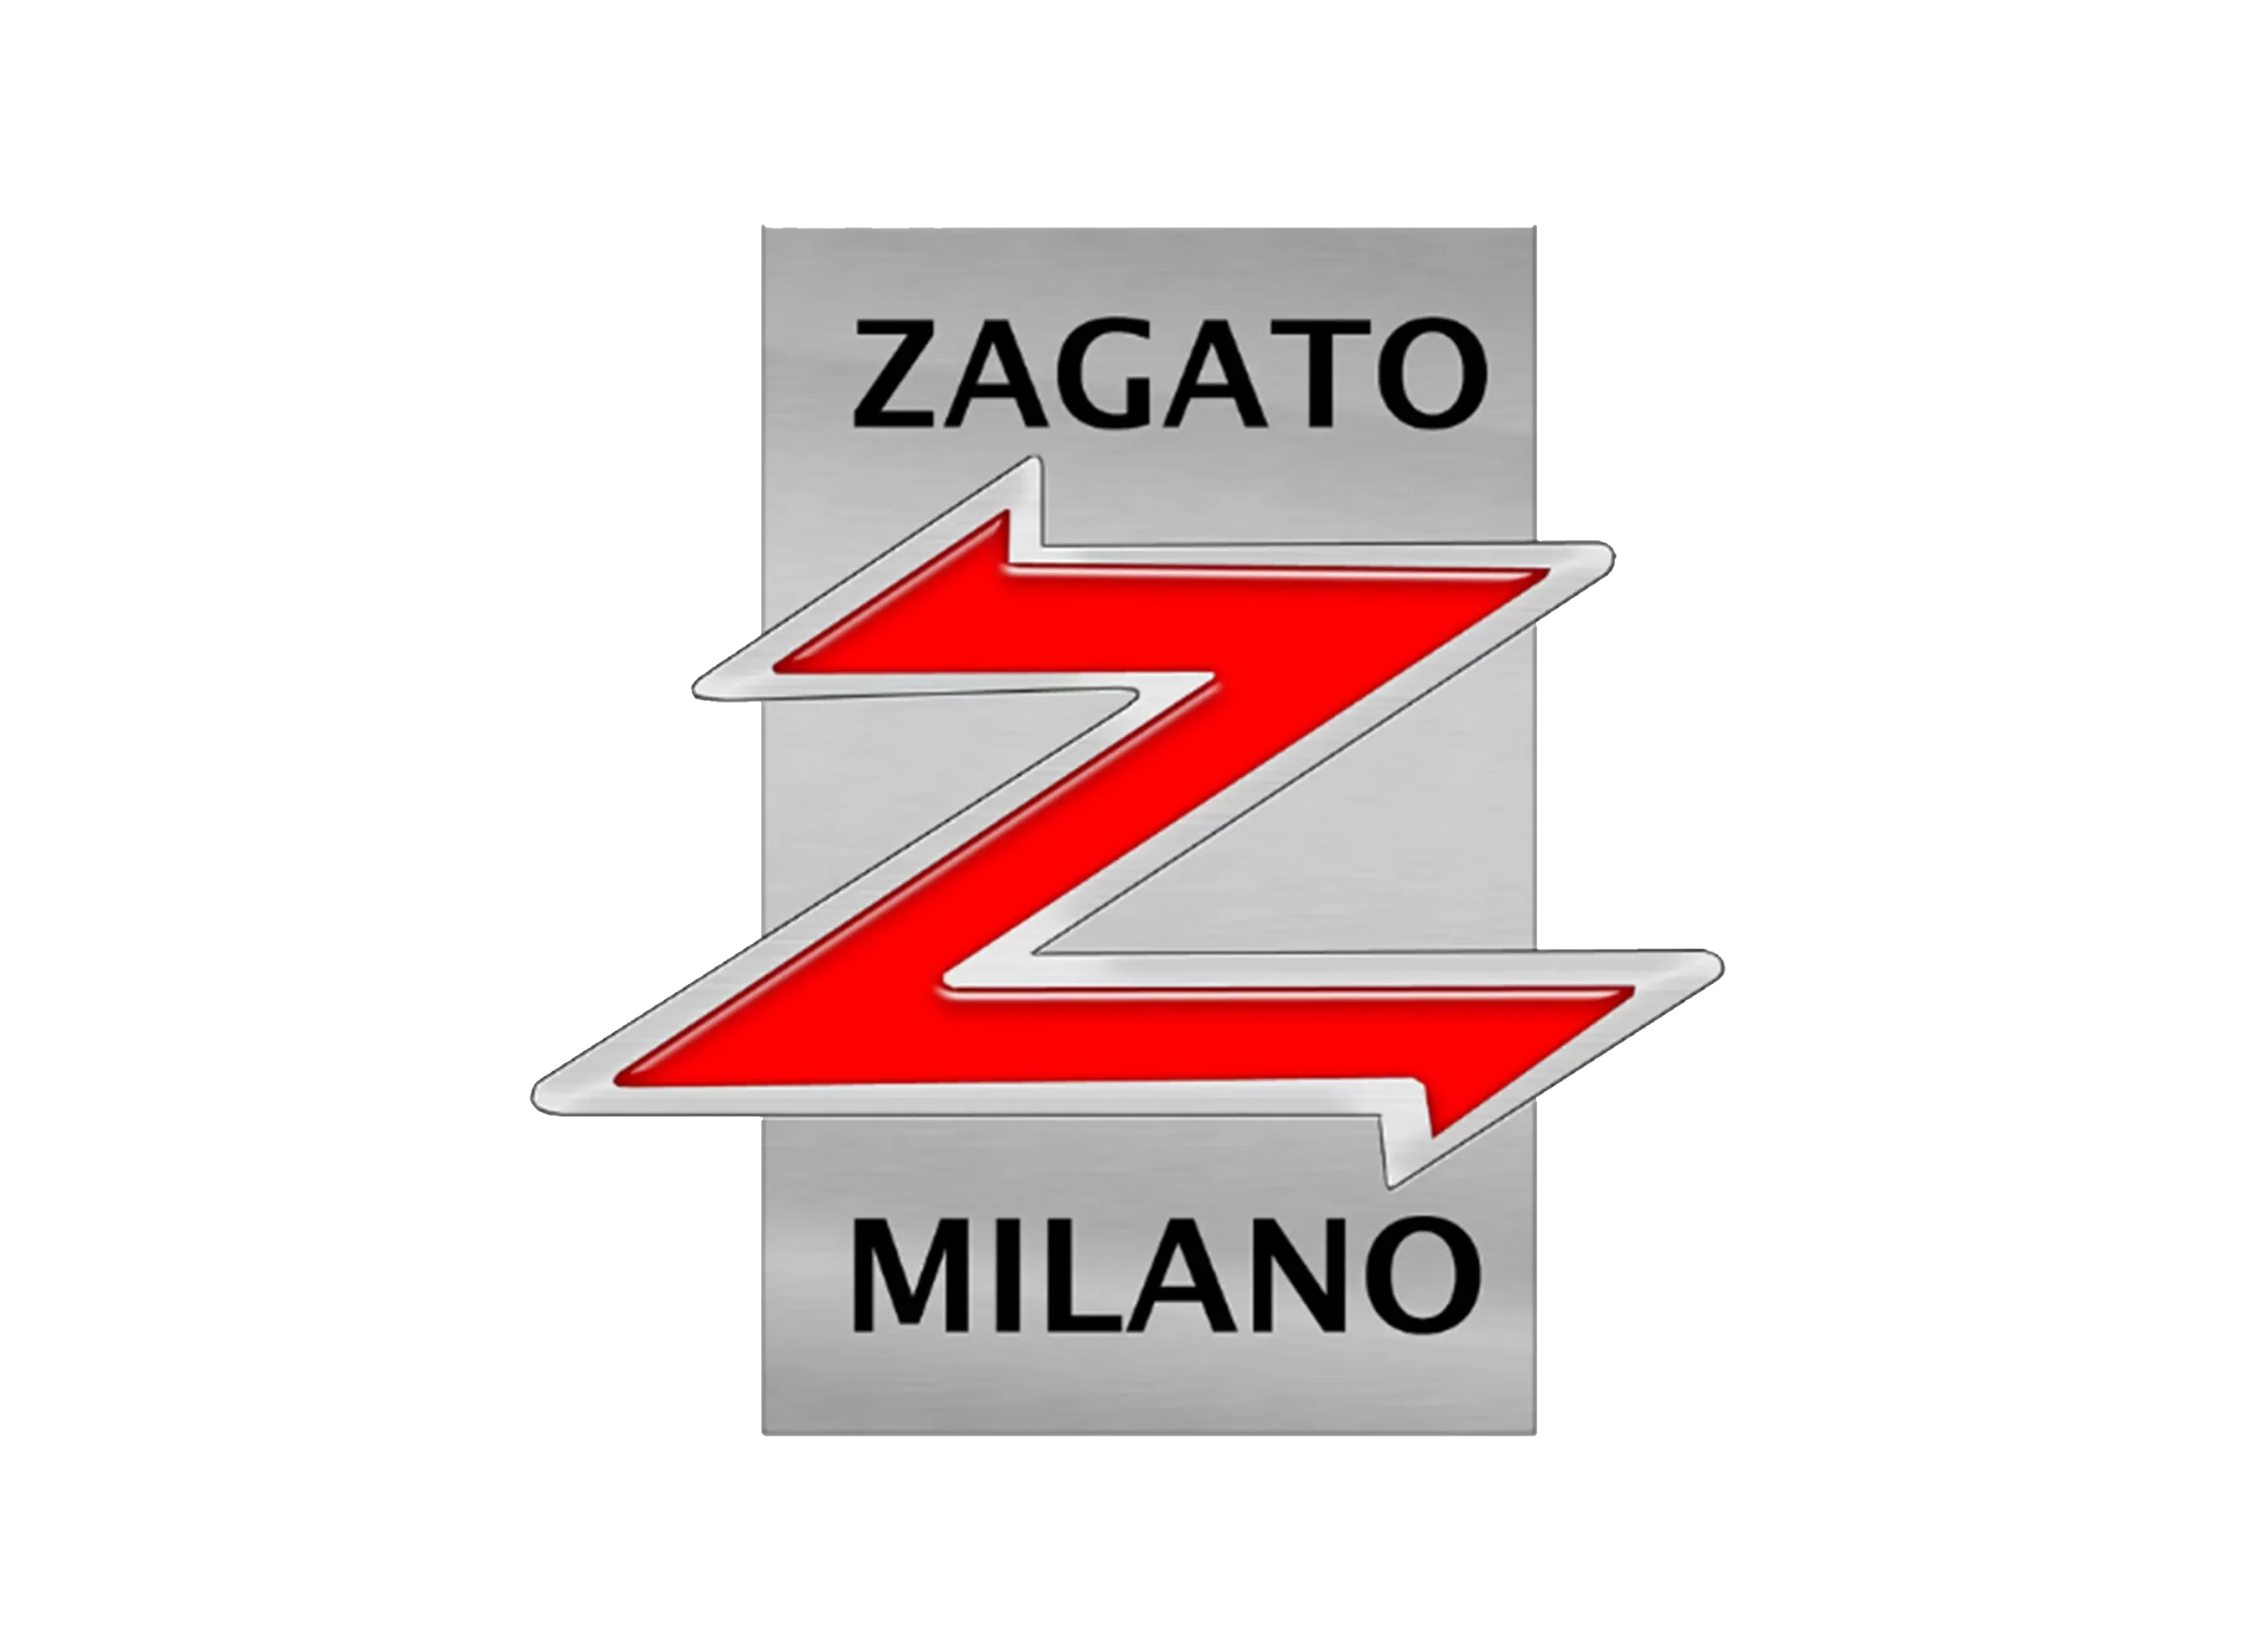 Zagato logo